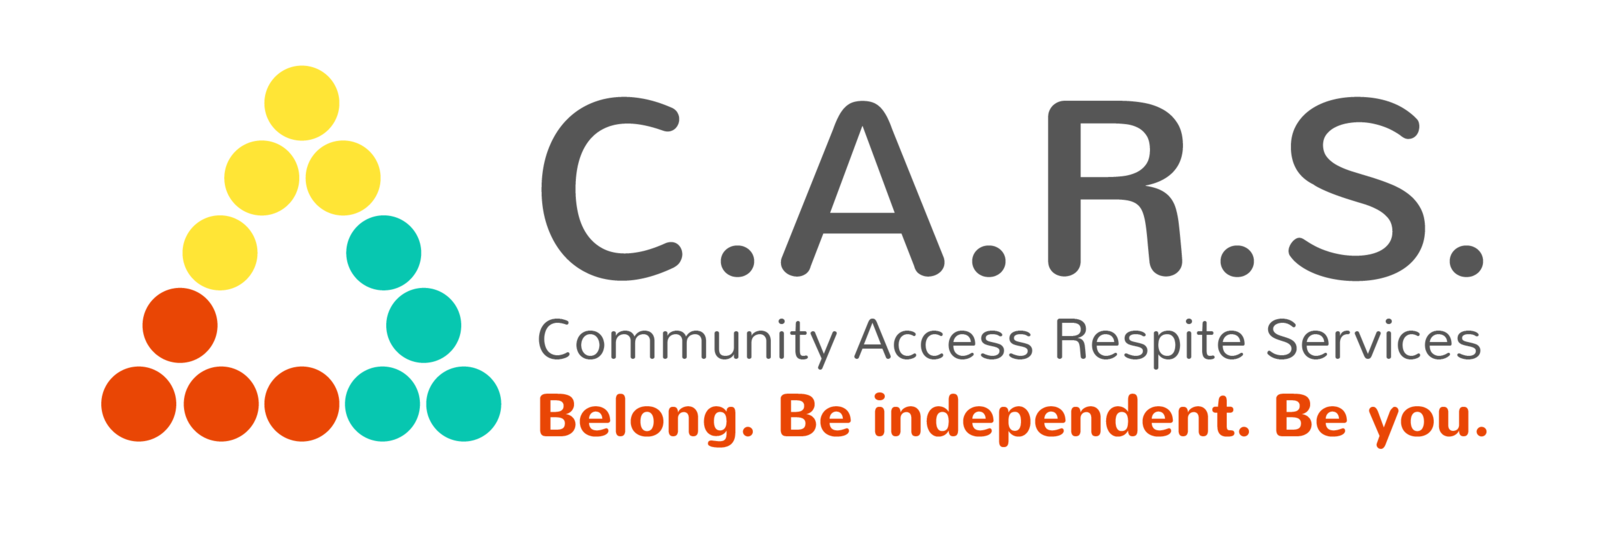 Community access. Community service Inc. Microsoft one Care. Bultex logo. Nonprofit Organization logo.